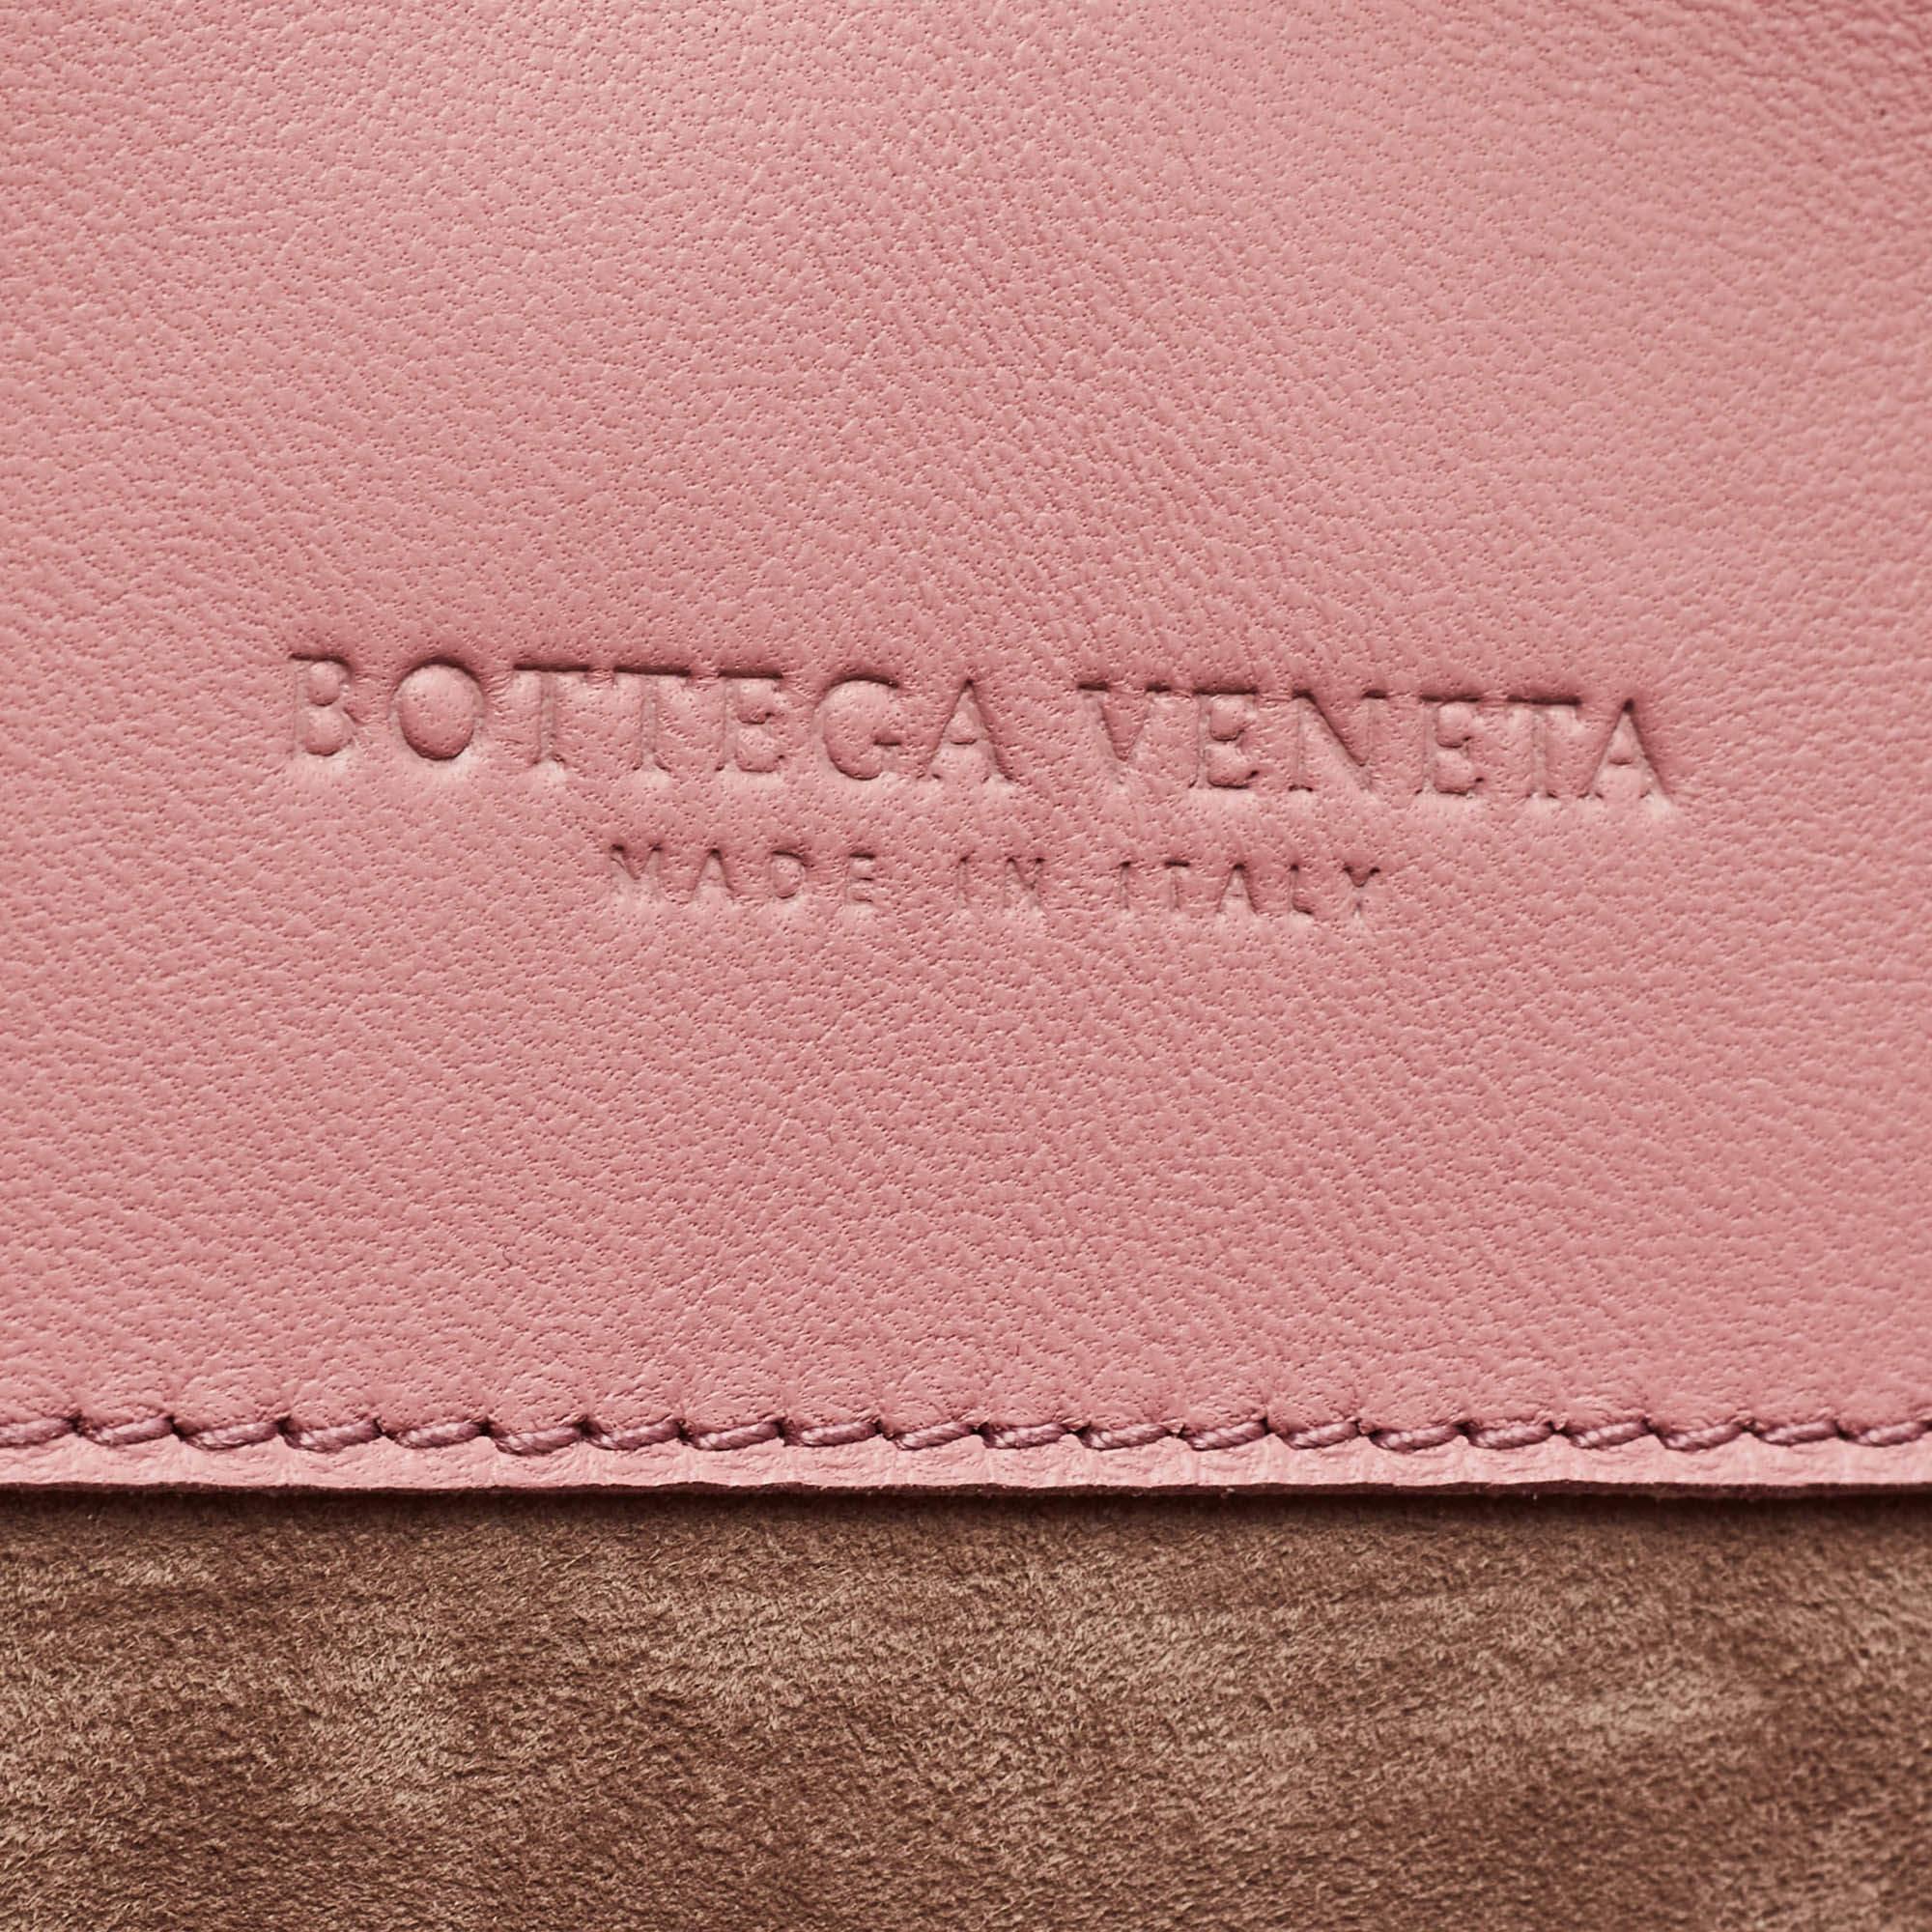 Bottega Veneta Pink Karung and Intrecciato Leather Flap Crossbody Bag For Sale 12